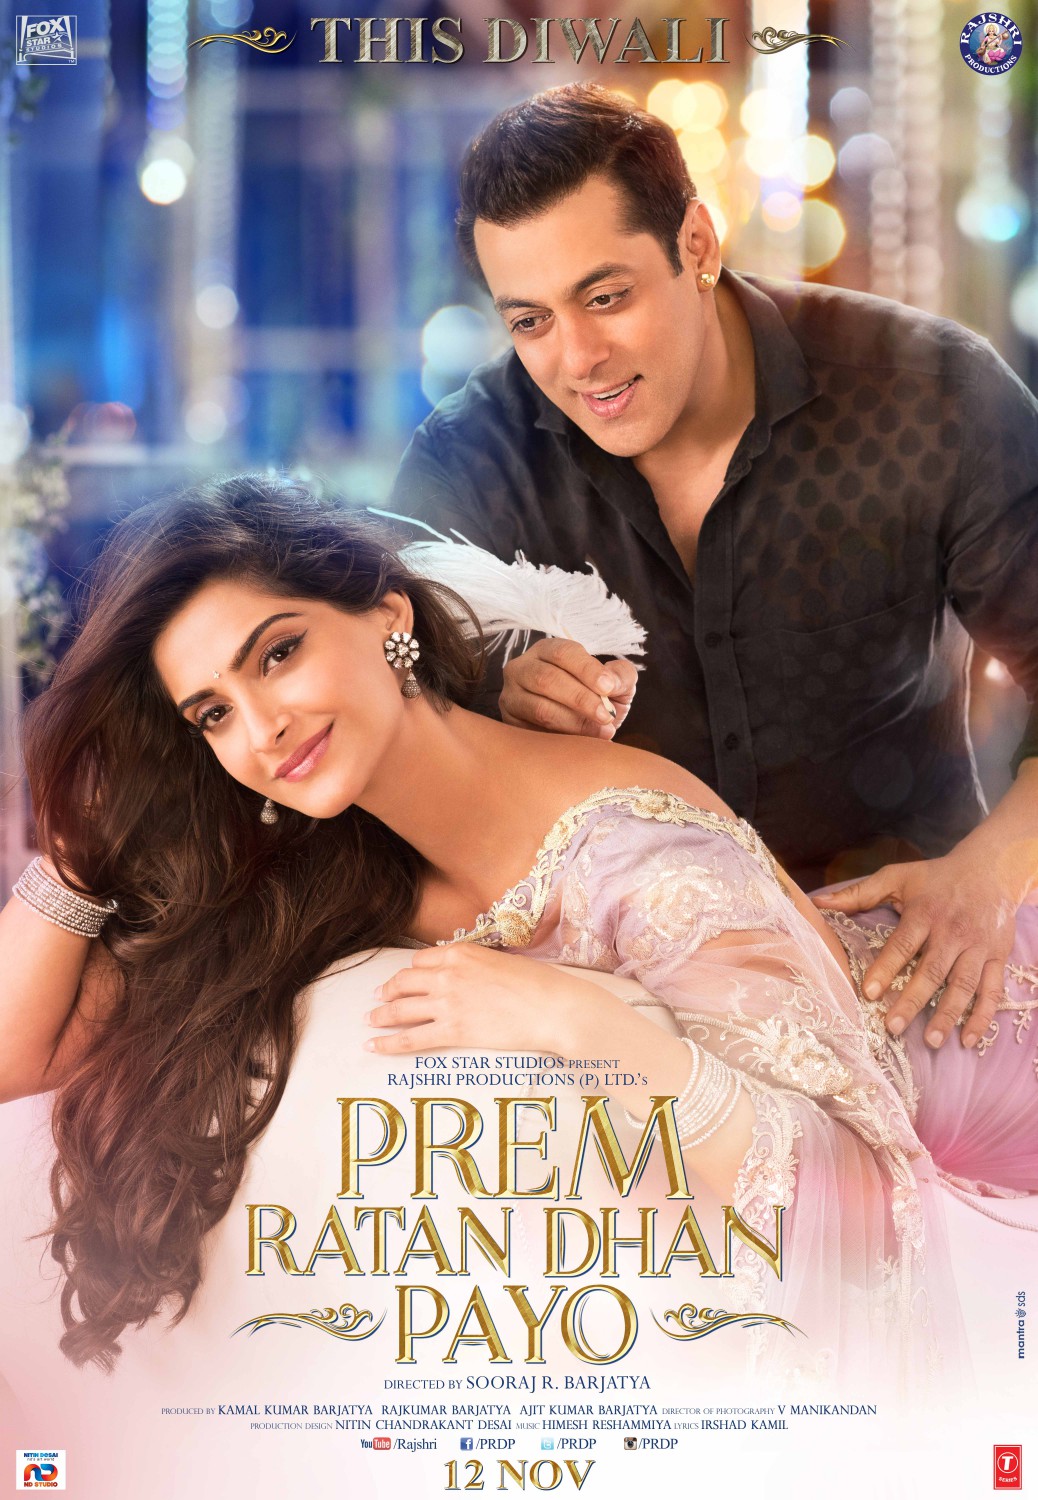 Prem Ratan Dhan Payo (#1 of 9): Extra Large Movie Poster Image - IMP Awards